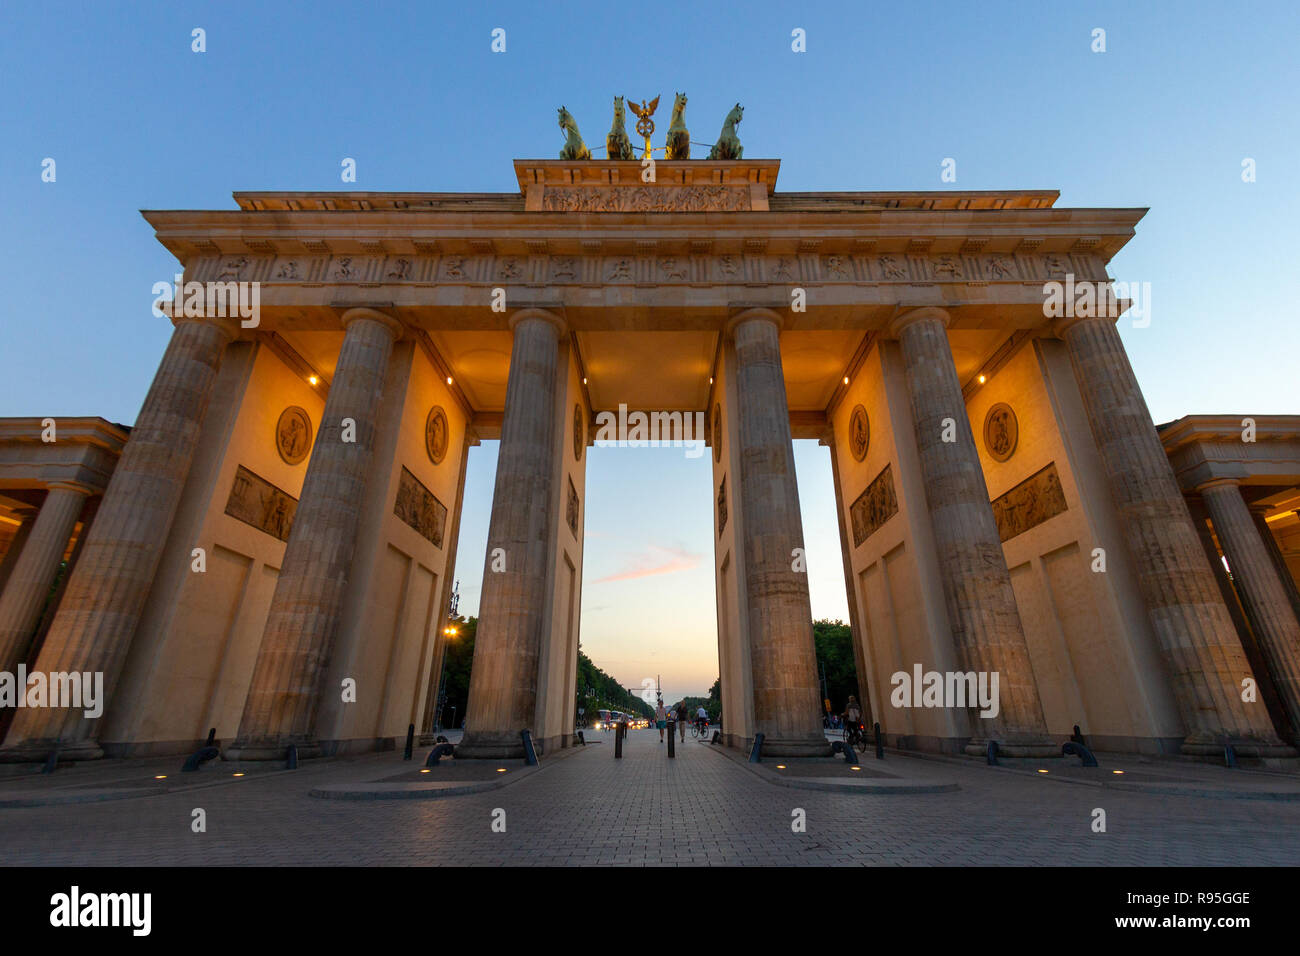 Evening view of the famous German landmark and national symbol Brandenburger Tor (Brandenburg Gate) in Berlin. Stock Photo